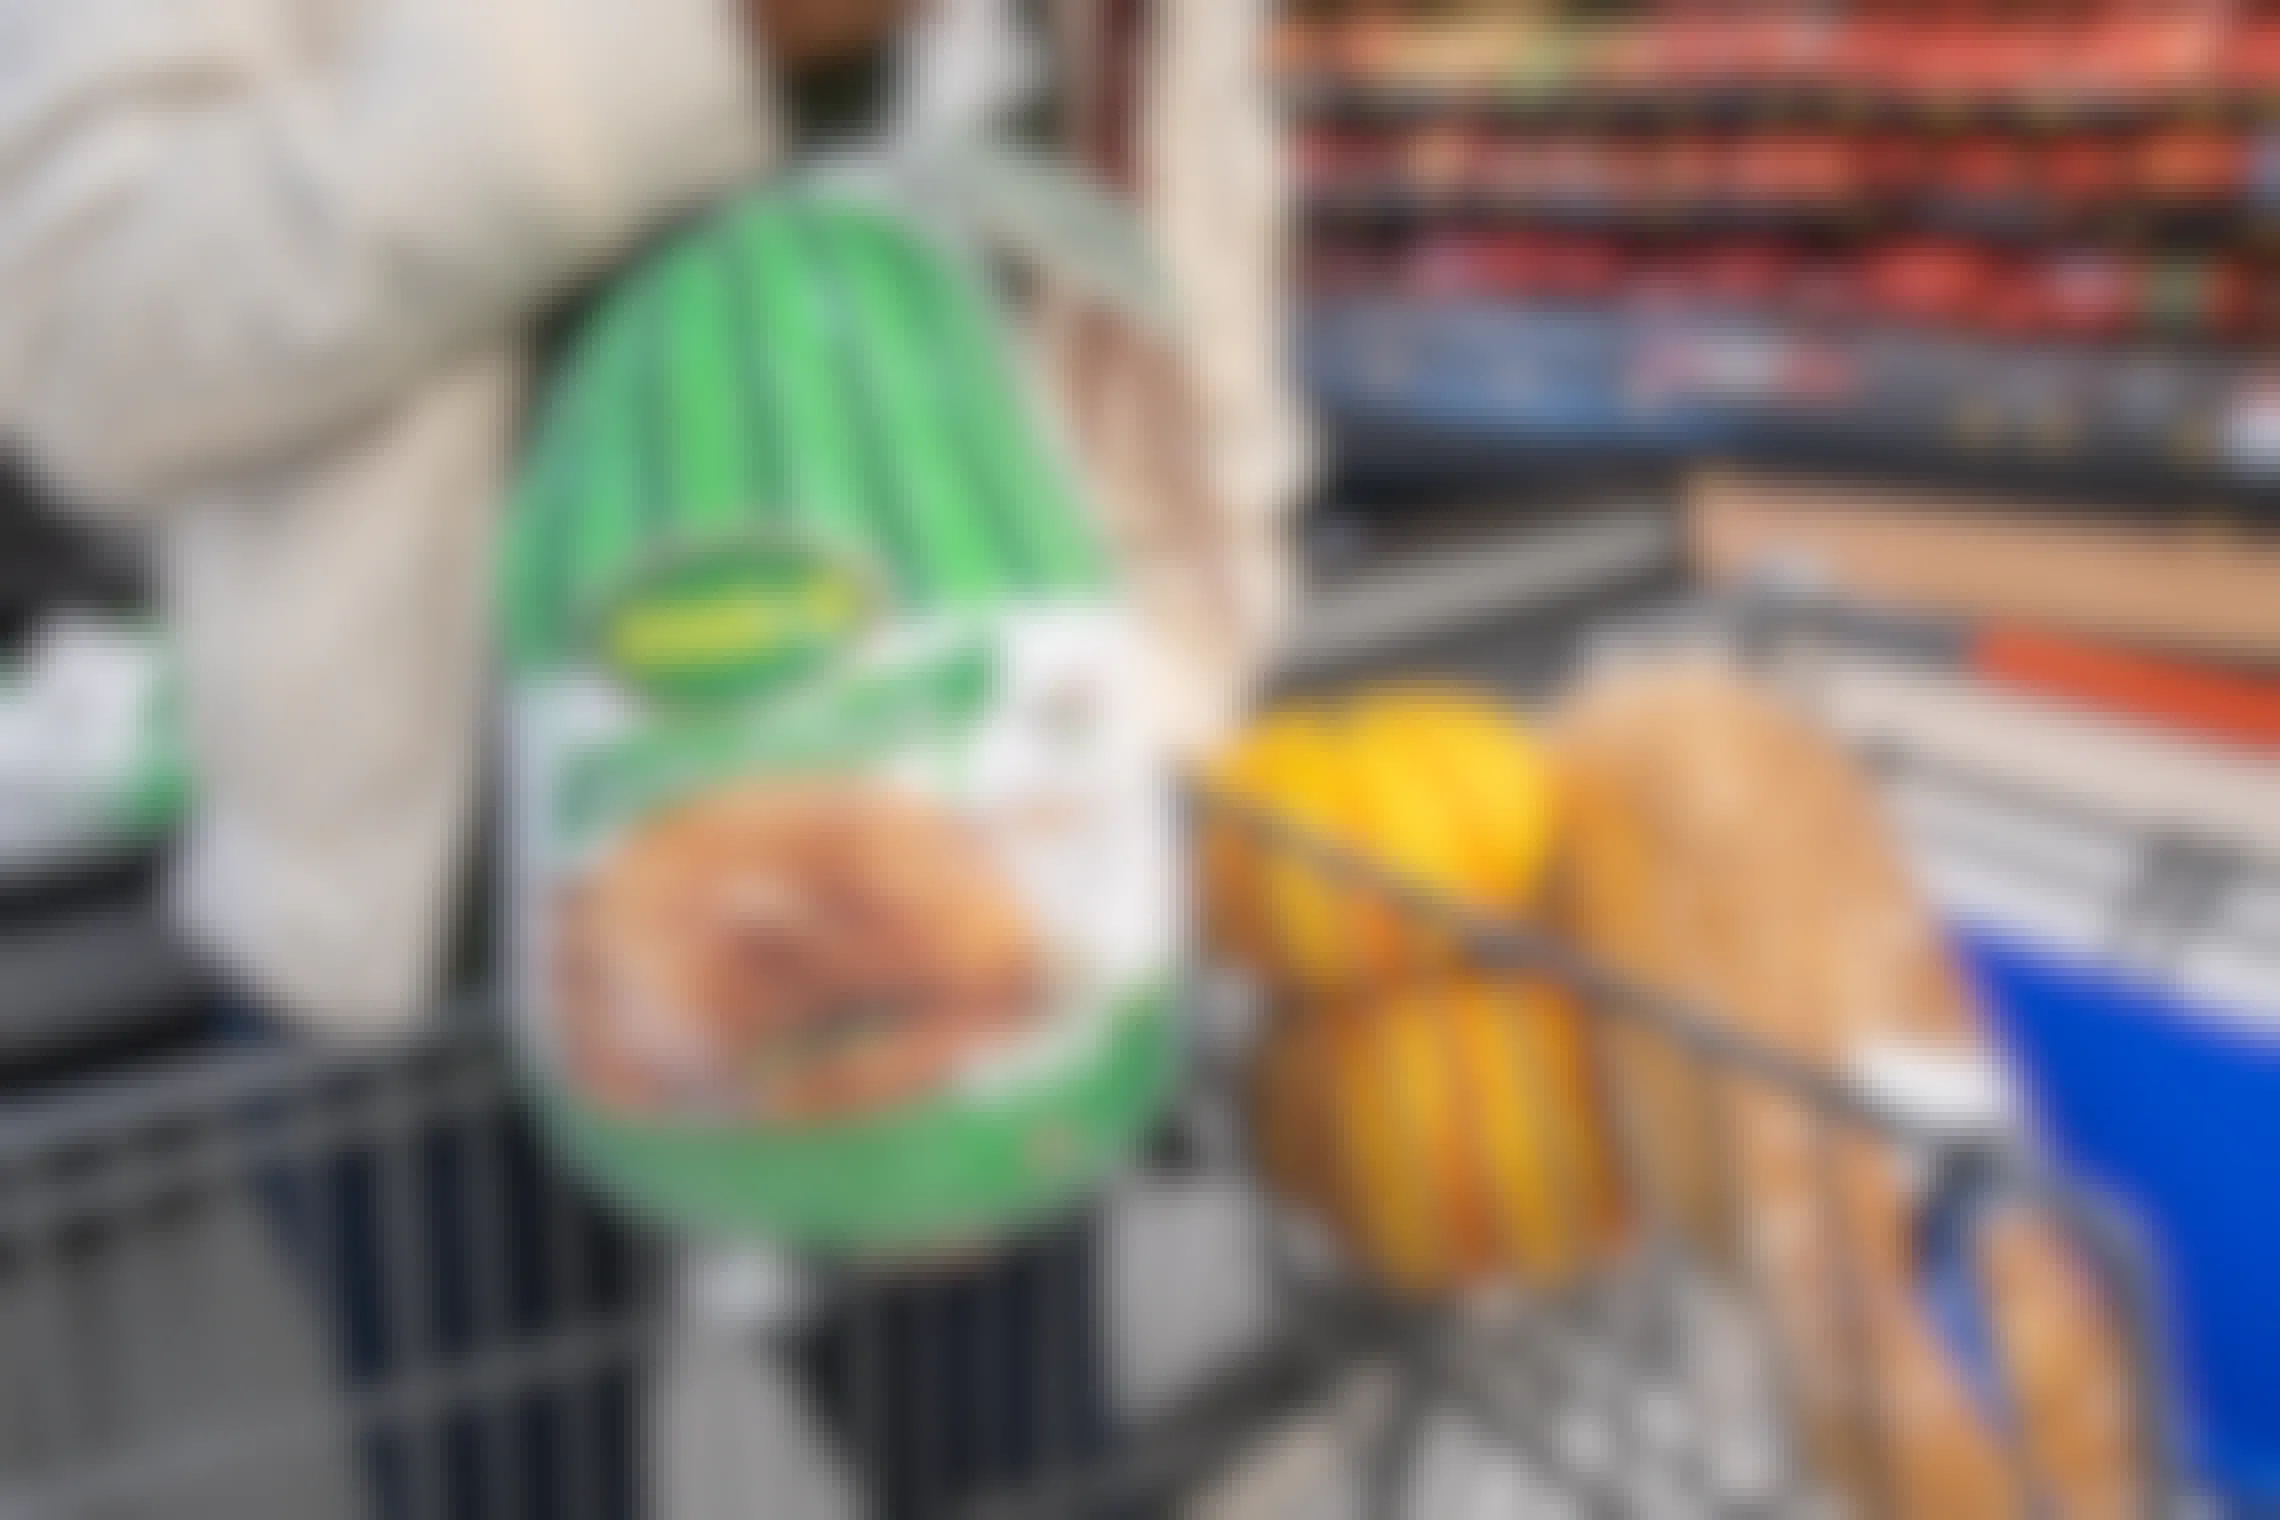 A woman putting a frozen turkey into a shopping cart.